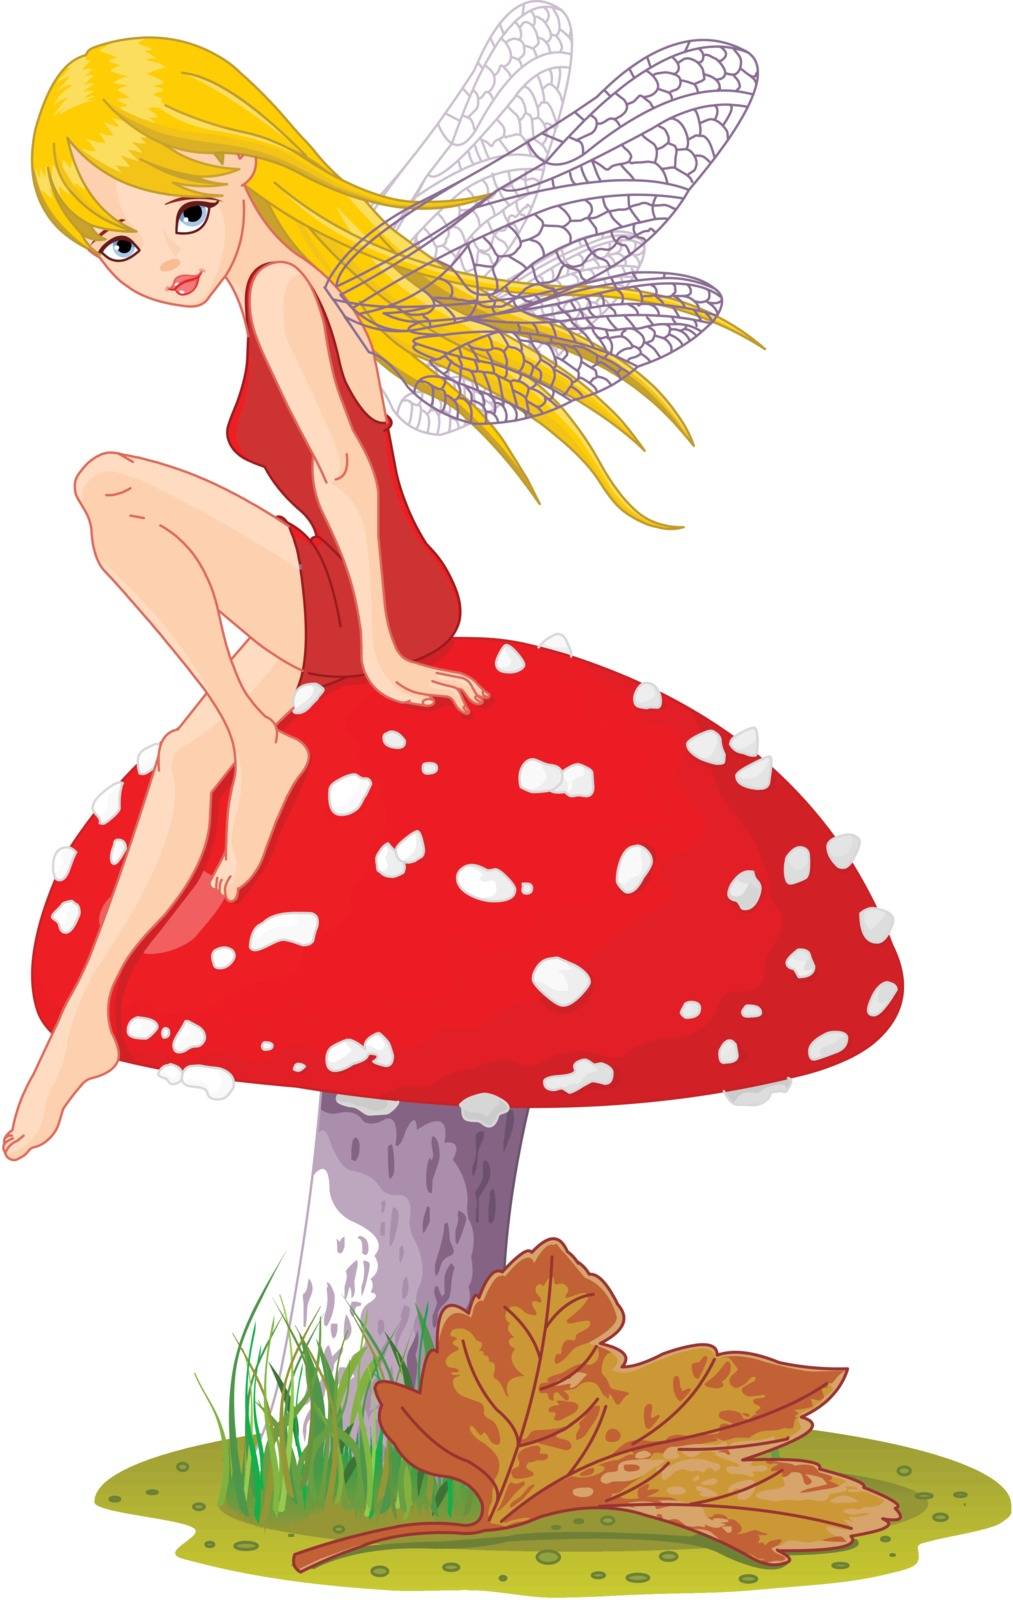 Mushroom Fairy by Dazdraperma